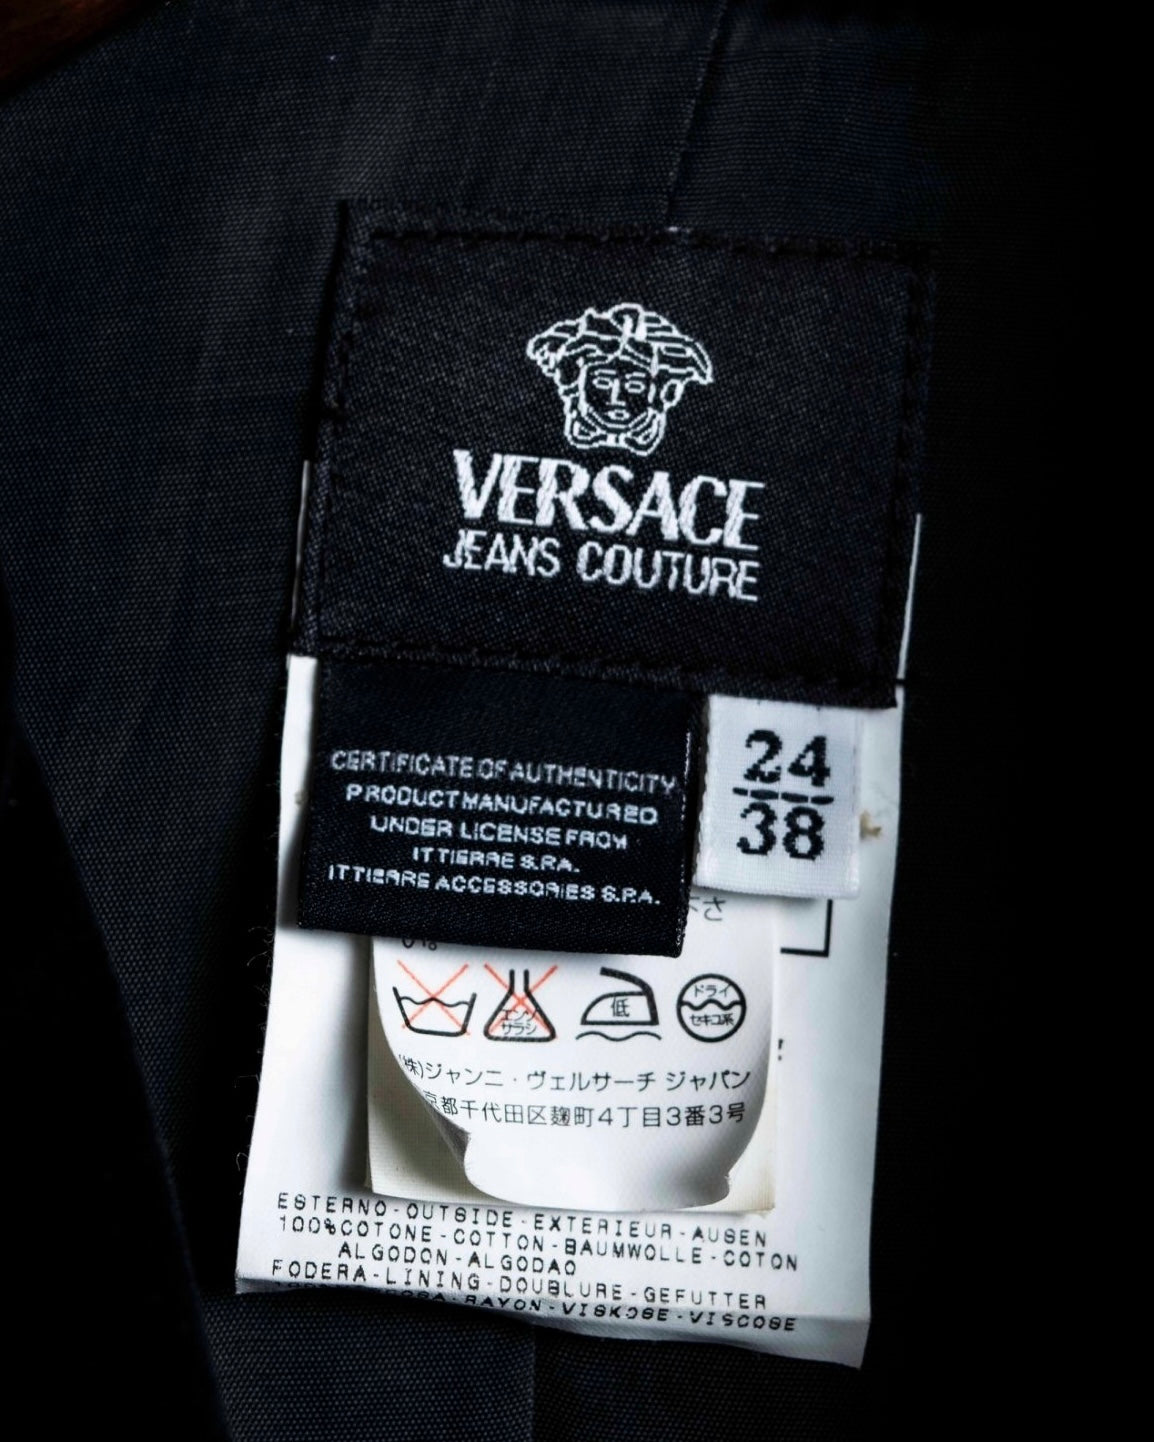 "VERSACE JEANS COUTURE" Velor peak lapel tailored jacket